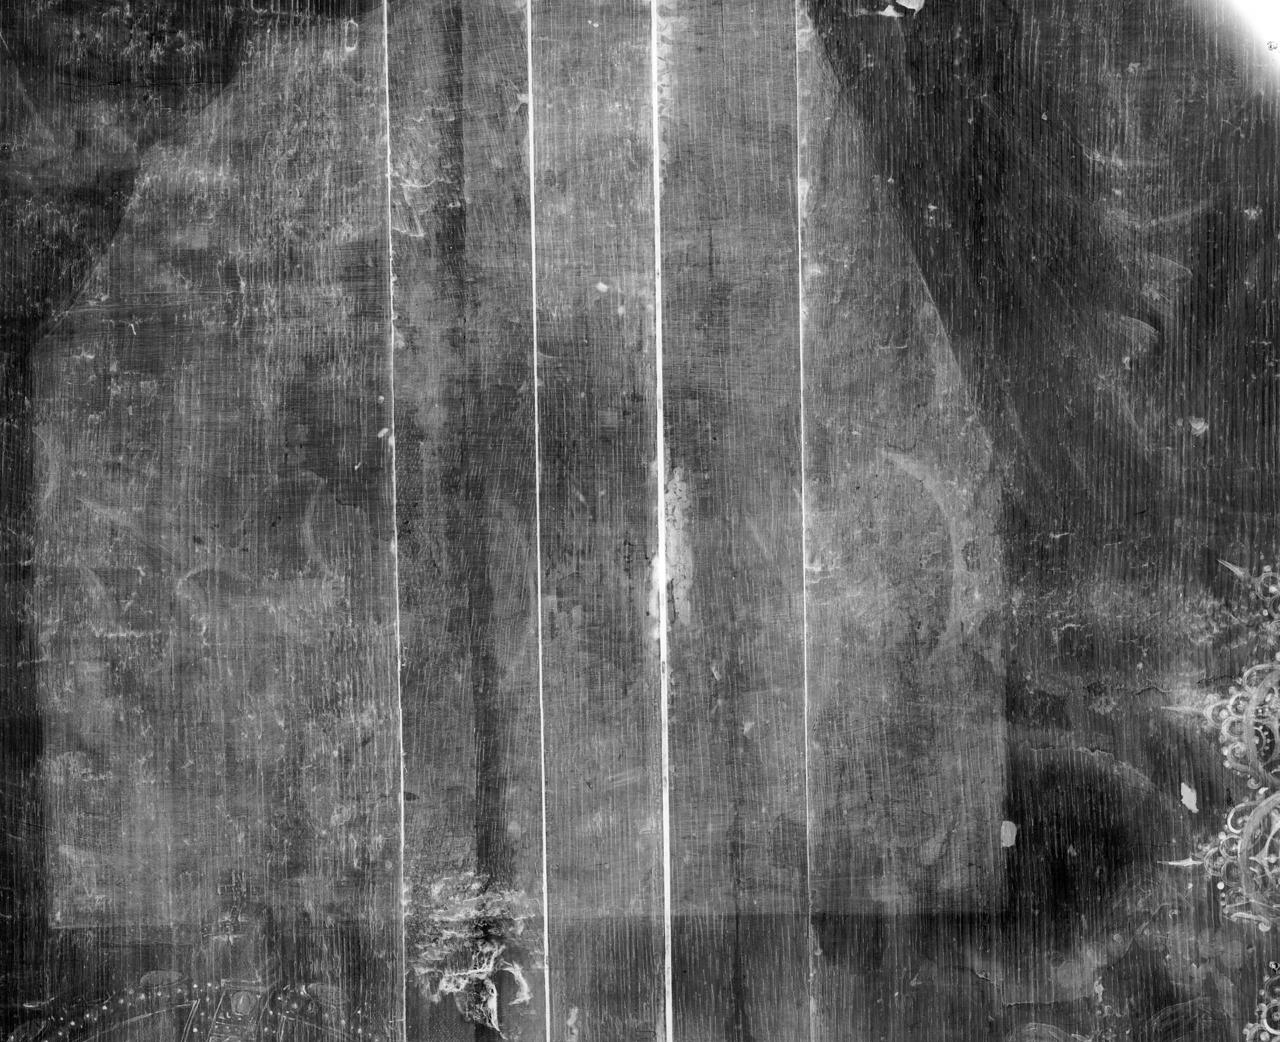 1987 X-ray, Left hand seascape